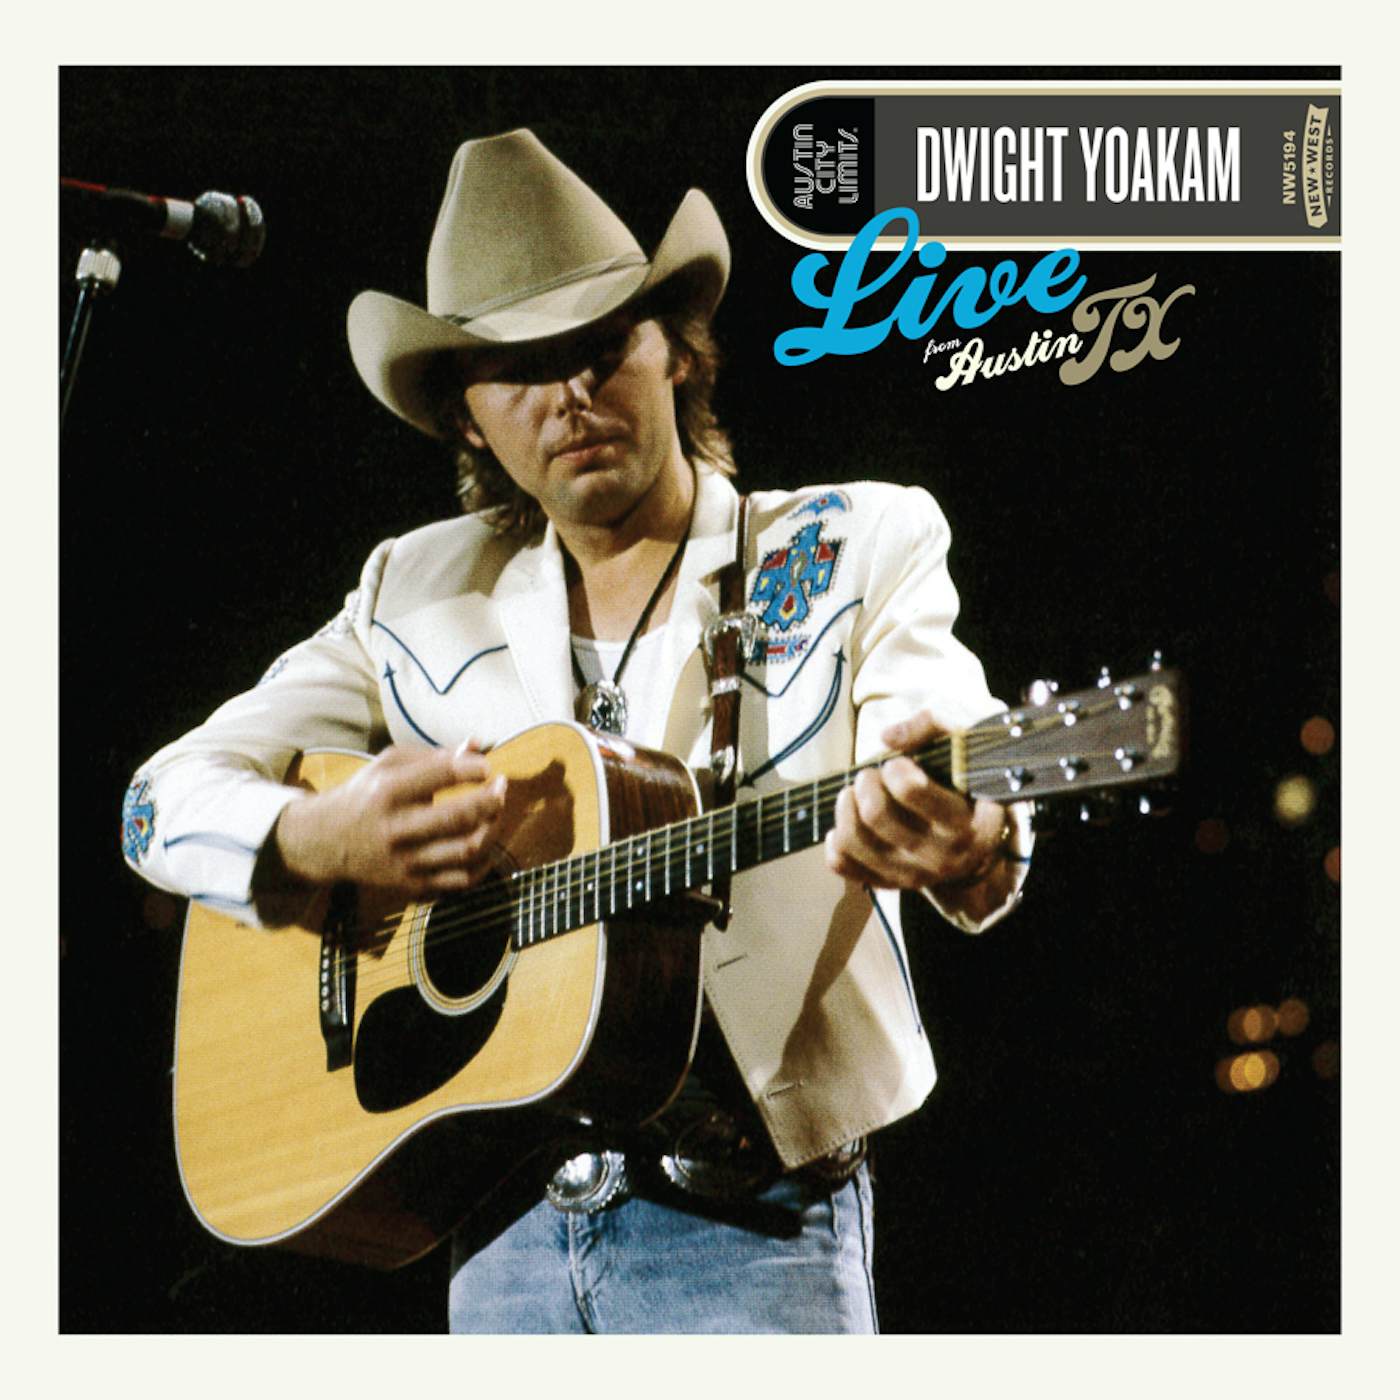 Dwight Yoakam LIVE FROM AUSTIN TX CD